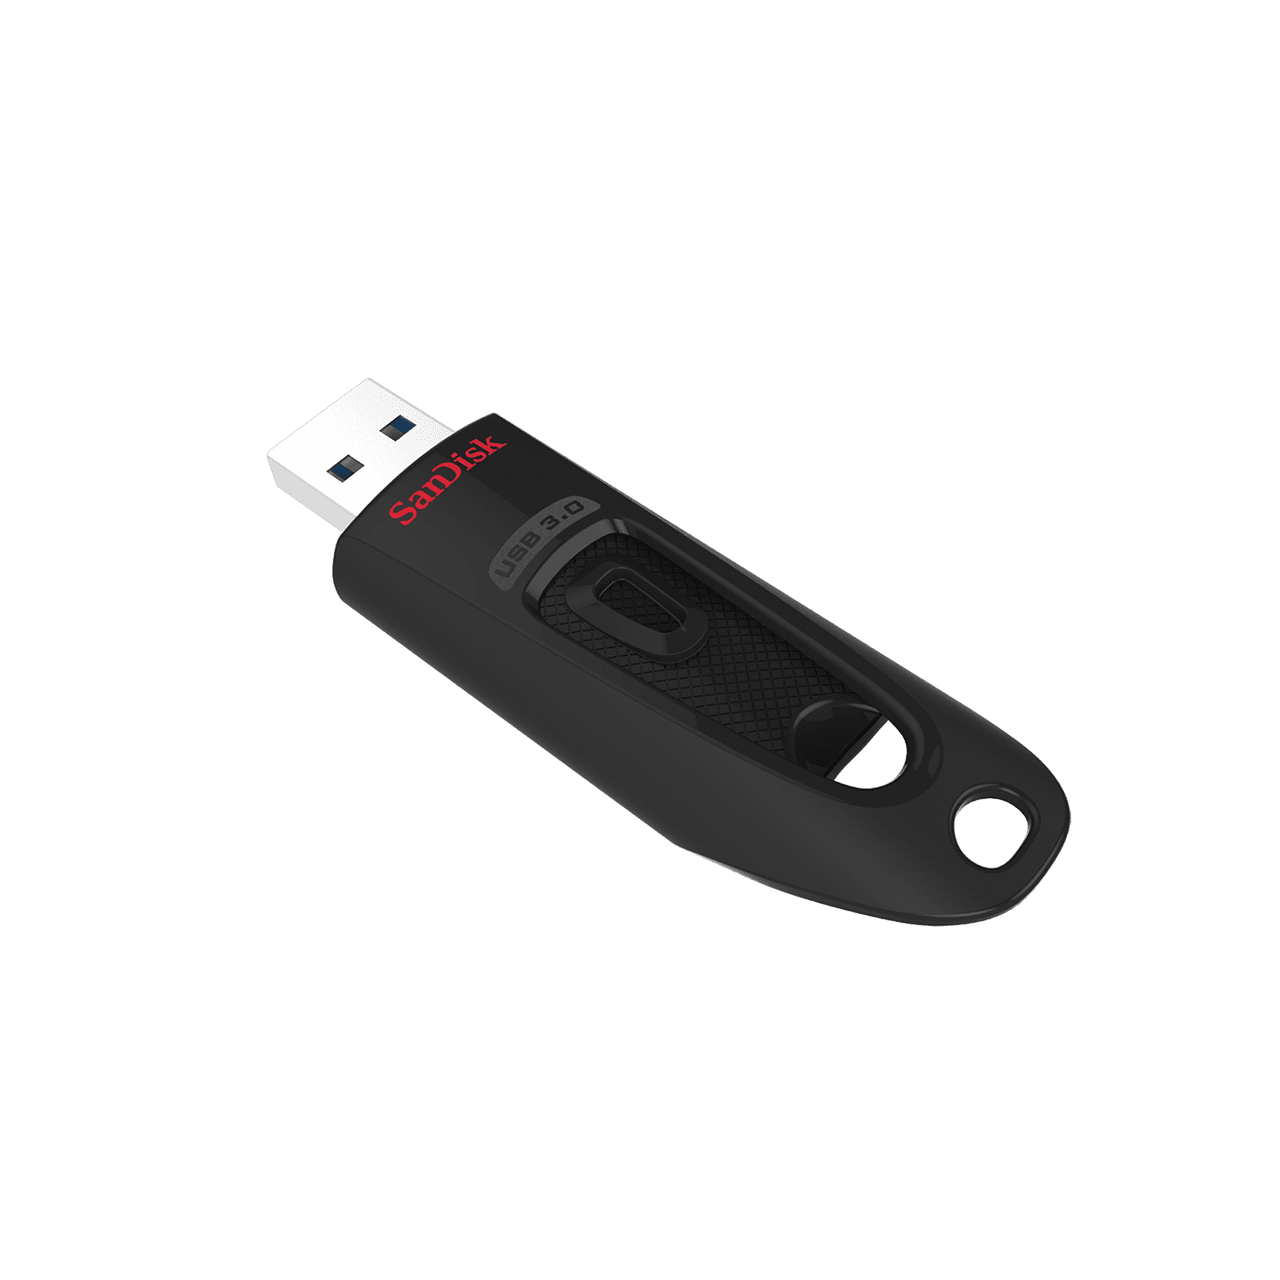 USBメモリ 256GB SanDisk USB3.1 Gen1-A Type-C 両コネクタ搭載 R:150MB s 回転式 海外パッケージ 翌日配達送料無料